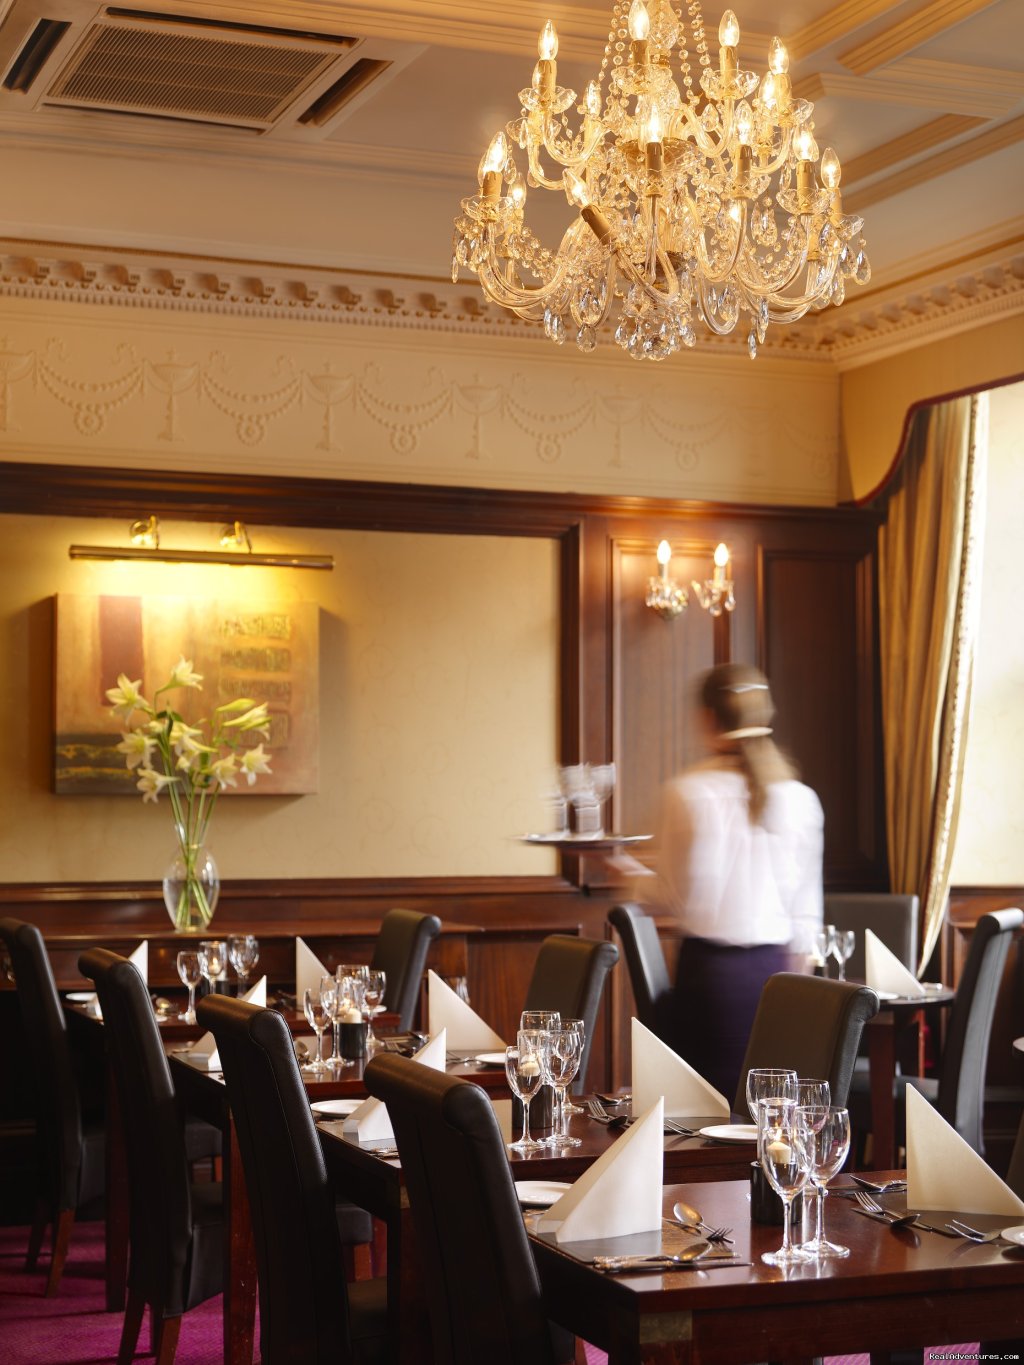 Edel in the Diningroom | Grand Hotel | Image #10/16 | 